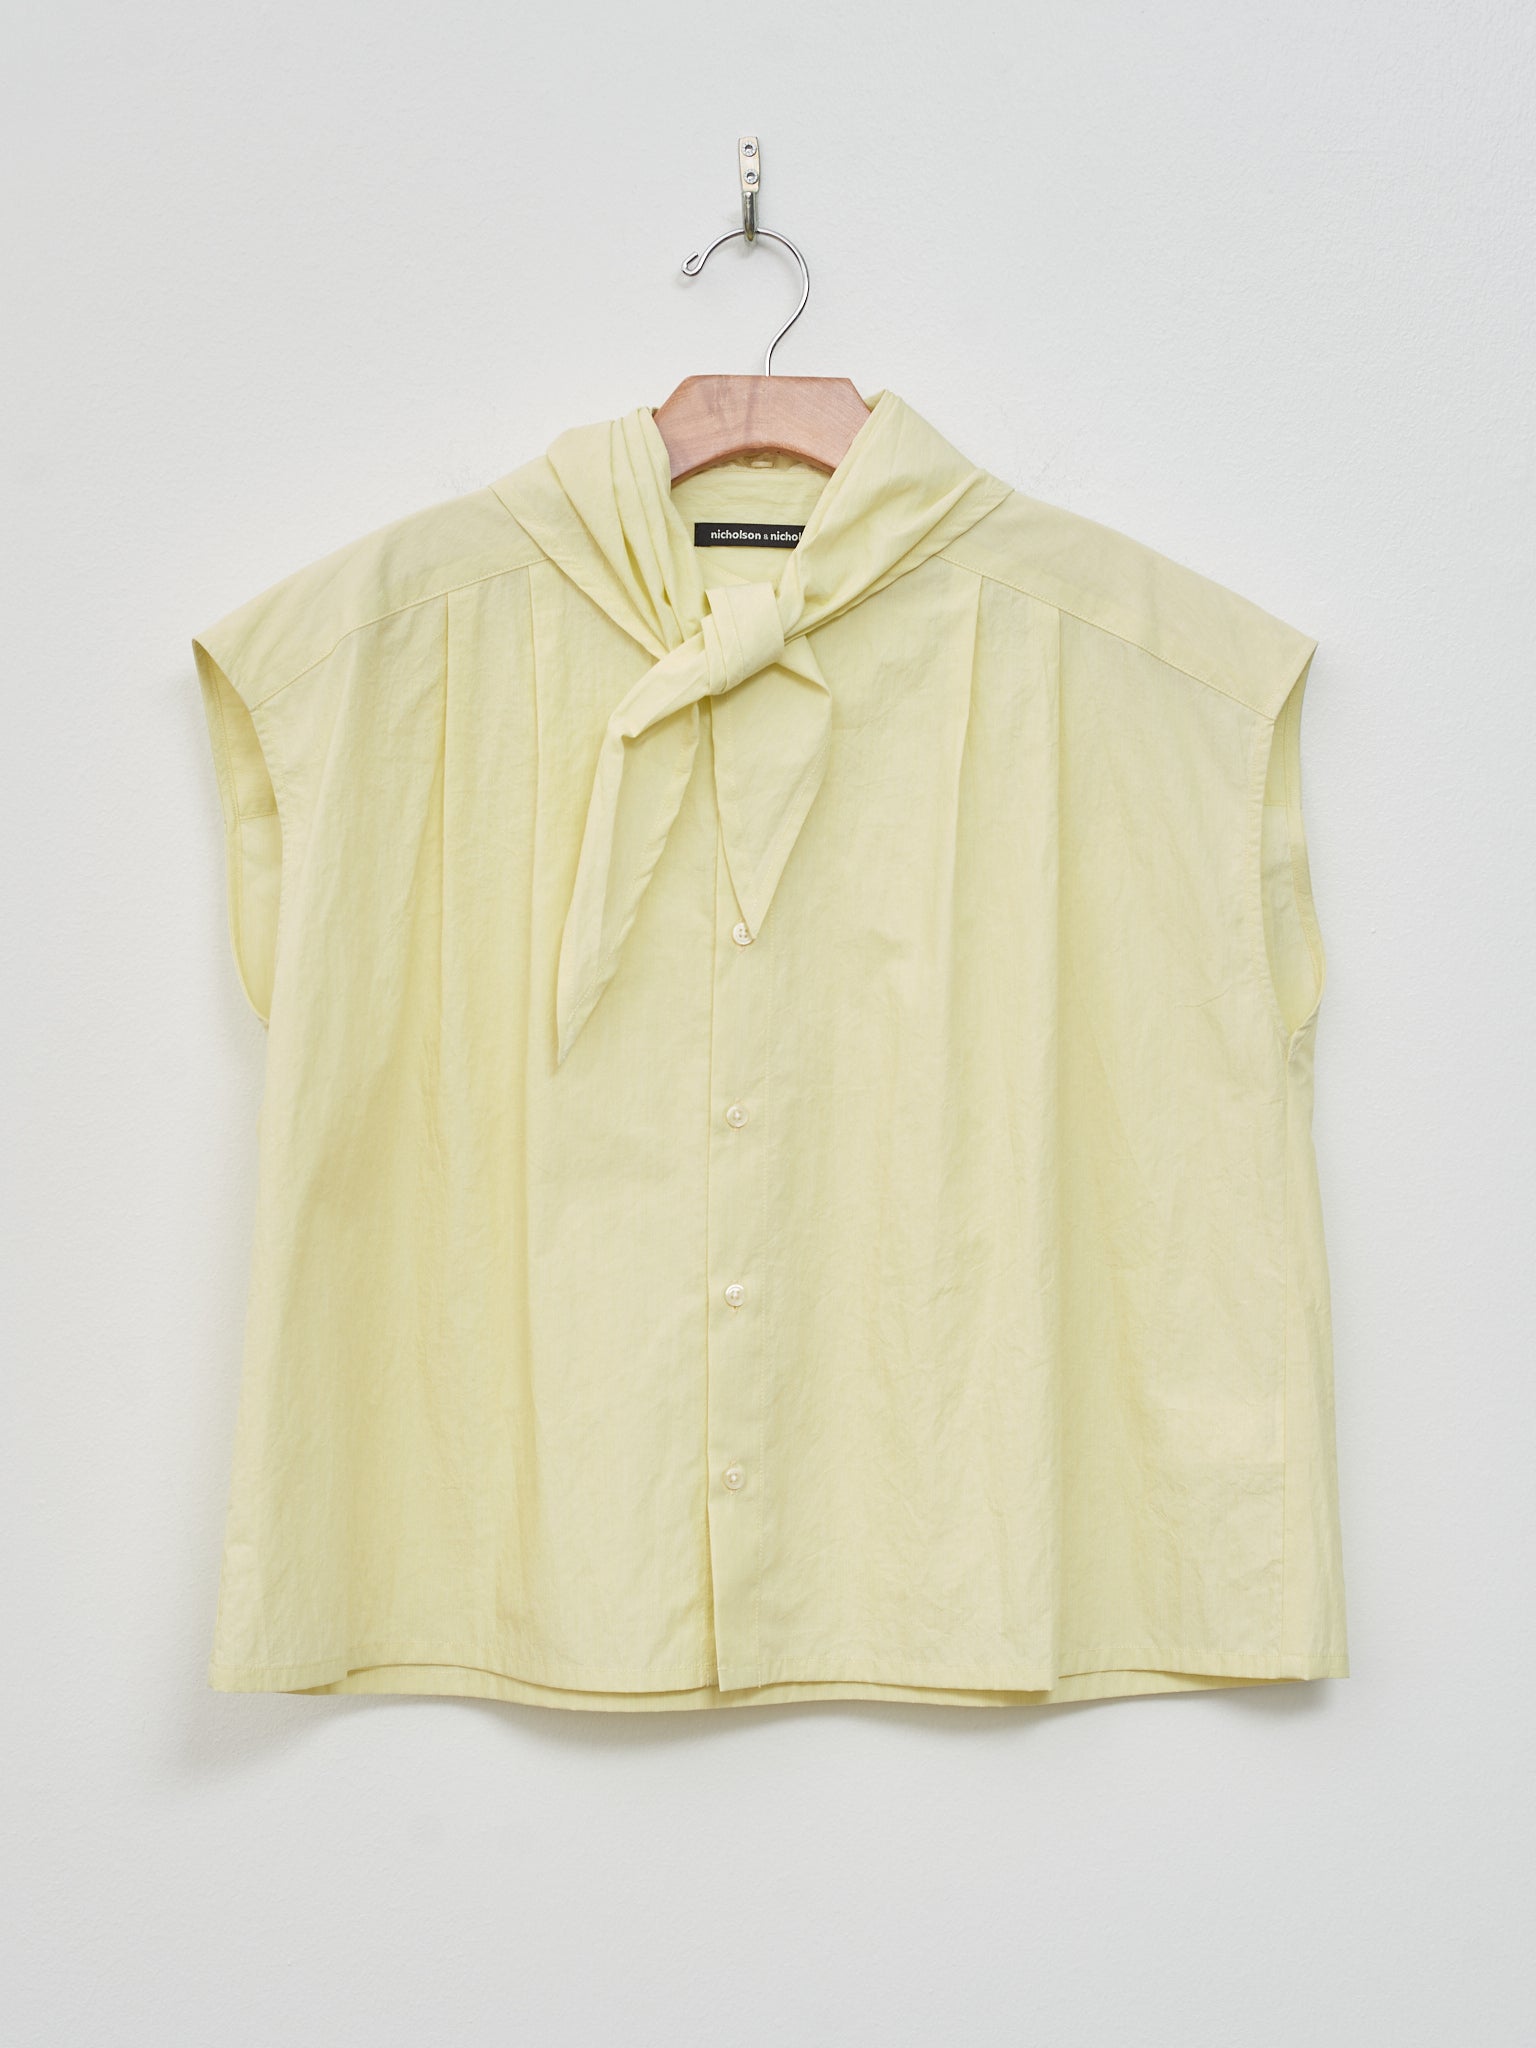 Namu Shop - Nicholson & Nicholson Smile Shirt - Yellow